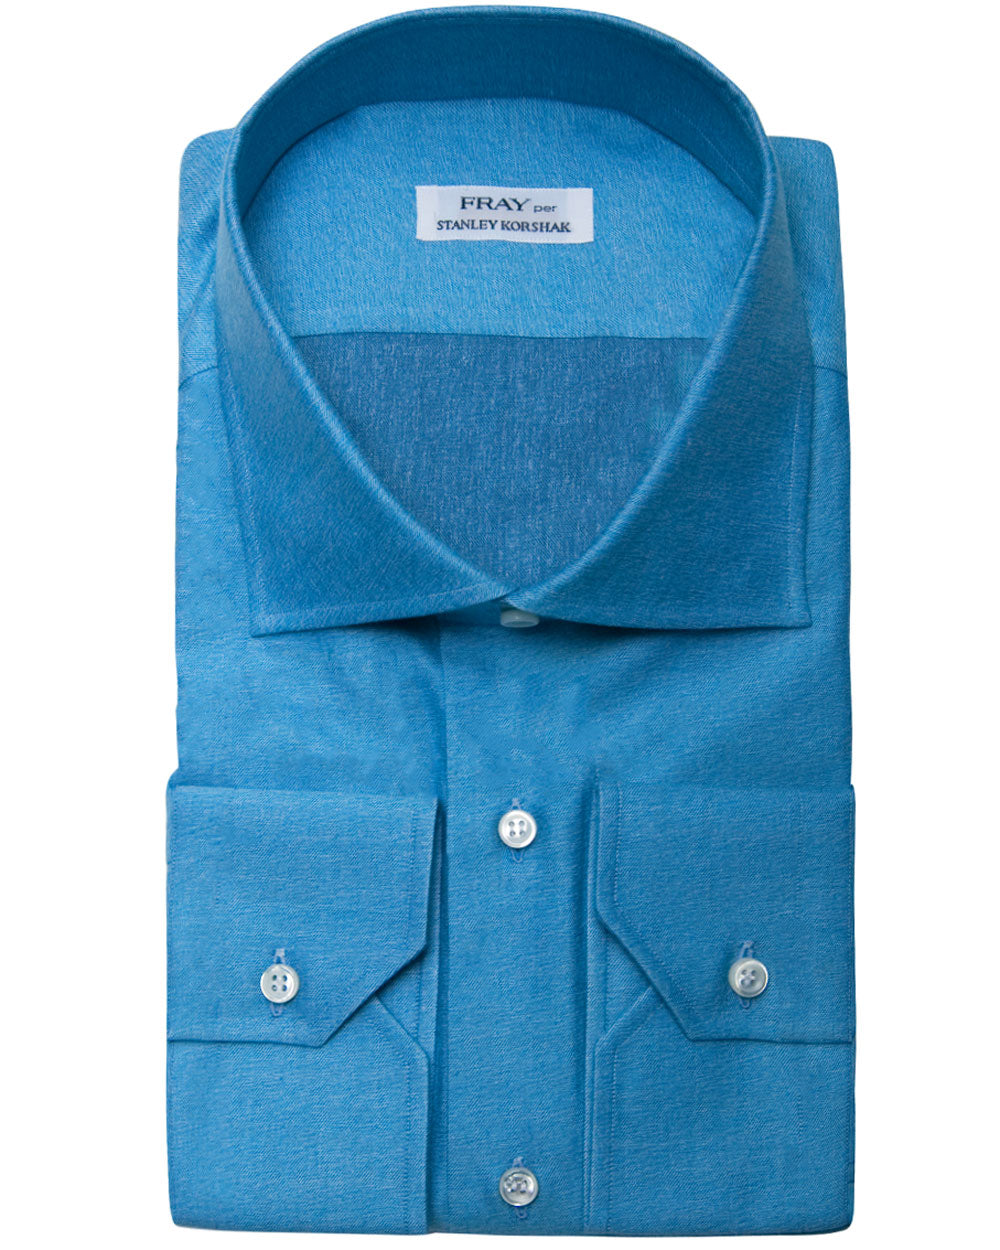 Heathered Turquoise Blue Cotton Sport Shirt